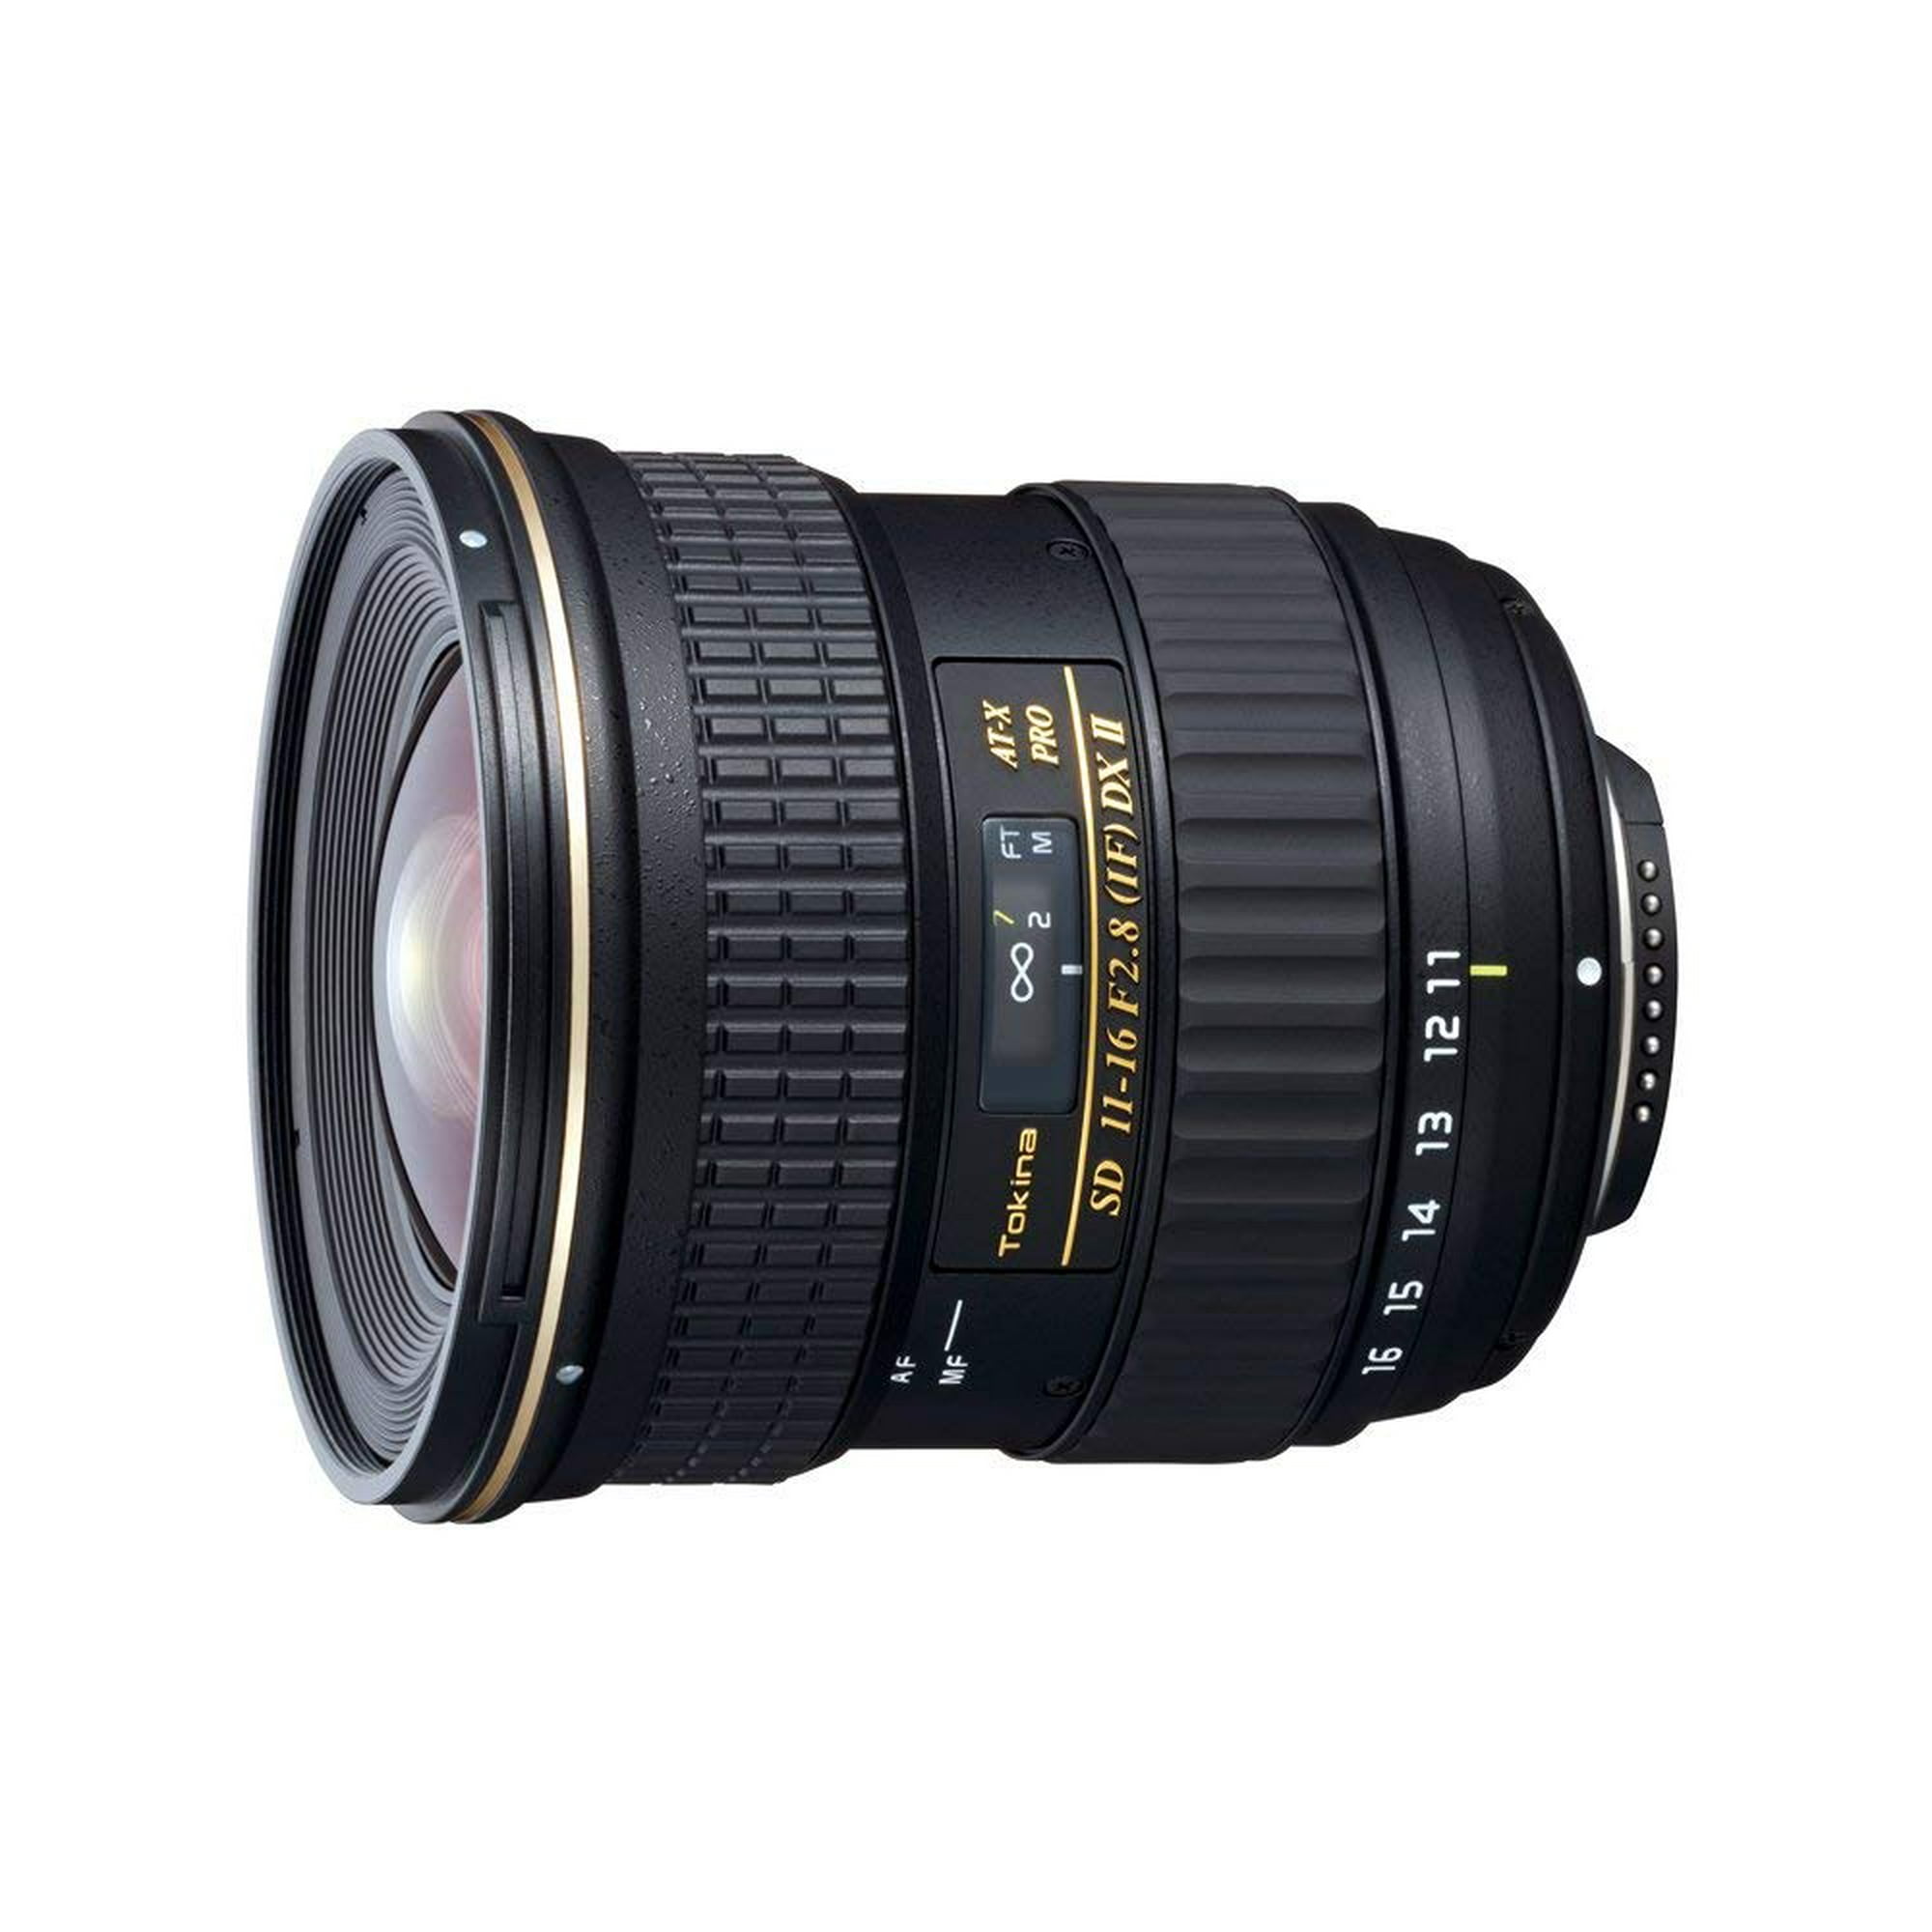 Tokina 11-16mm f/2.8 AT-X116 Pro DX II Digital Zoom Lens (for